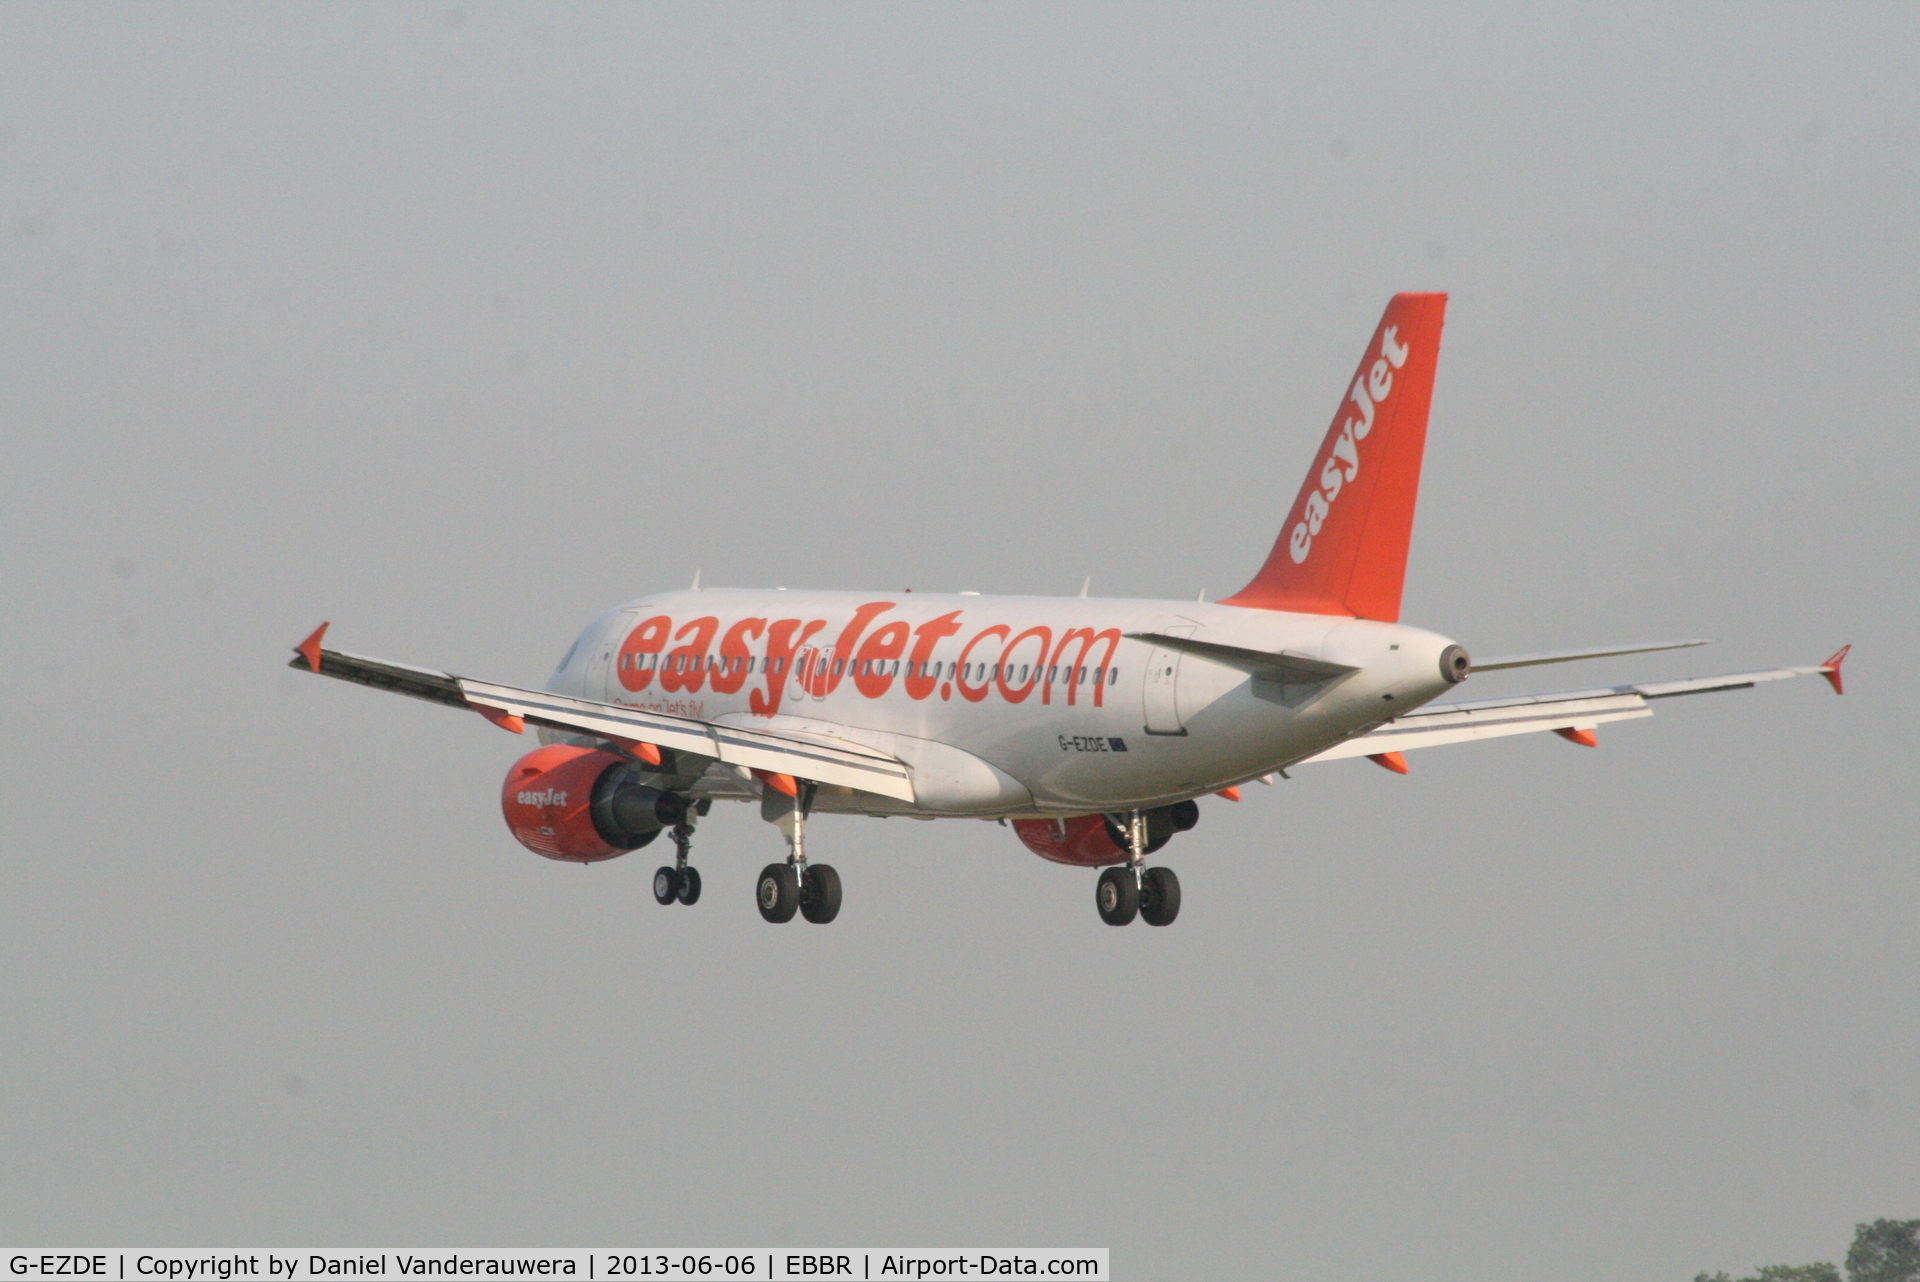 G-EZDE, 2008 Airbus A319-111 C/N 3426, Flight EZY2795 is descending to RWY 25L